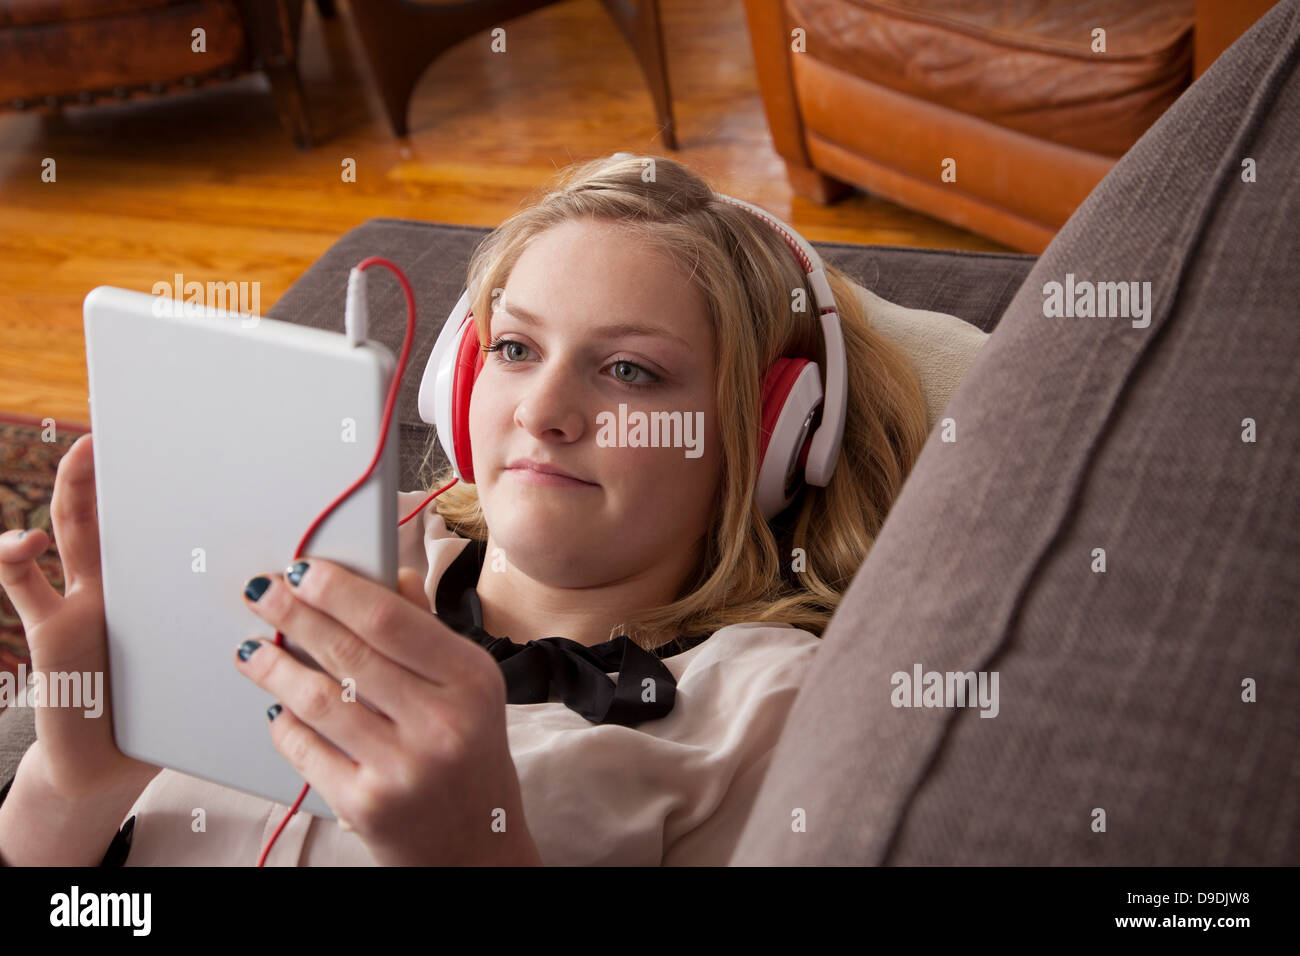 Girl lying on sofa using digital tablet Stock Photo